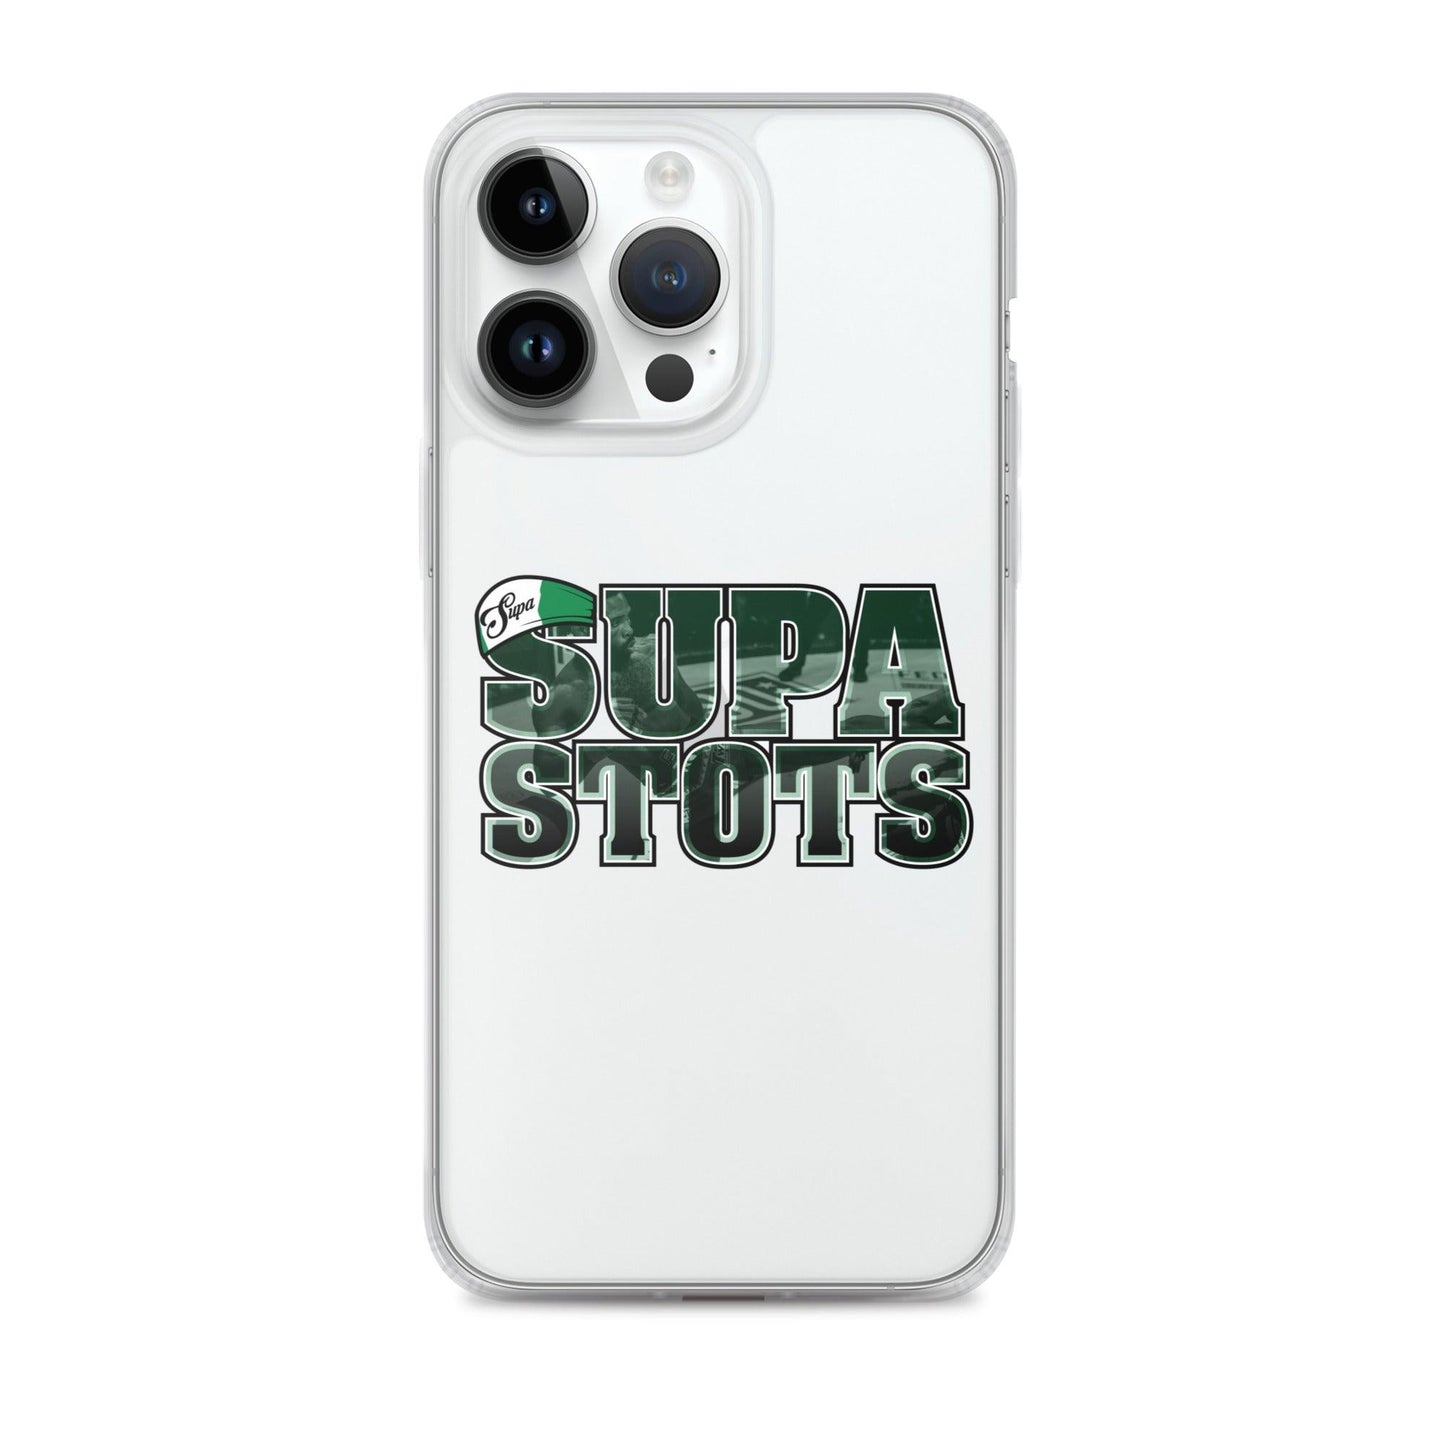 Raufeon Stots "Supa Stots" iPhone Case - Fan Arch